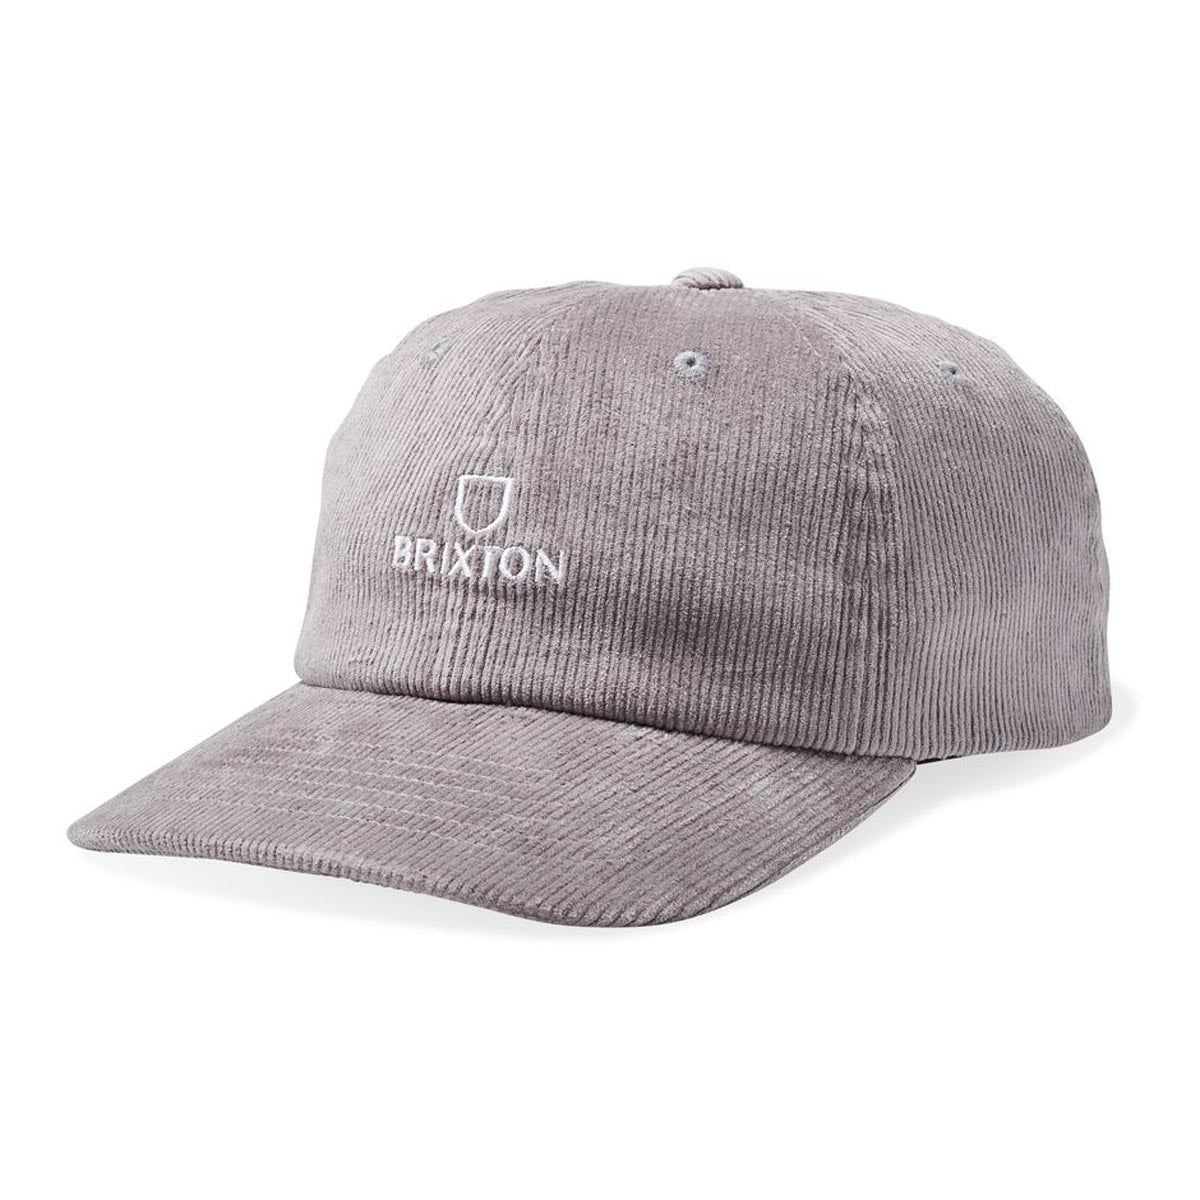 Brixton Alpha Lp Hat - Cinder Grey Cord image 1